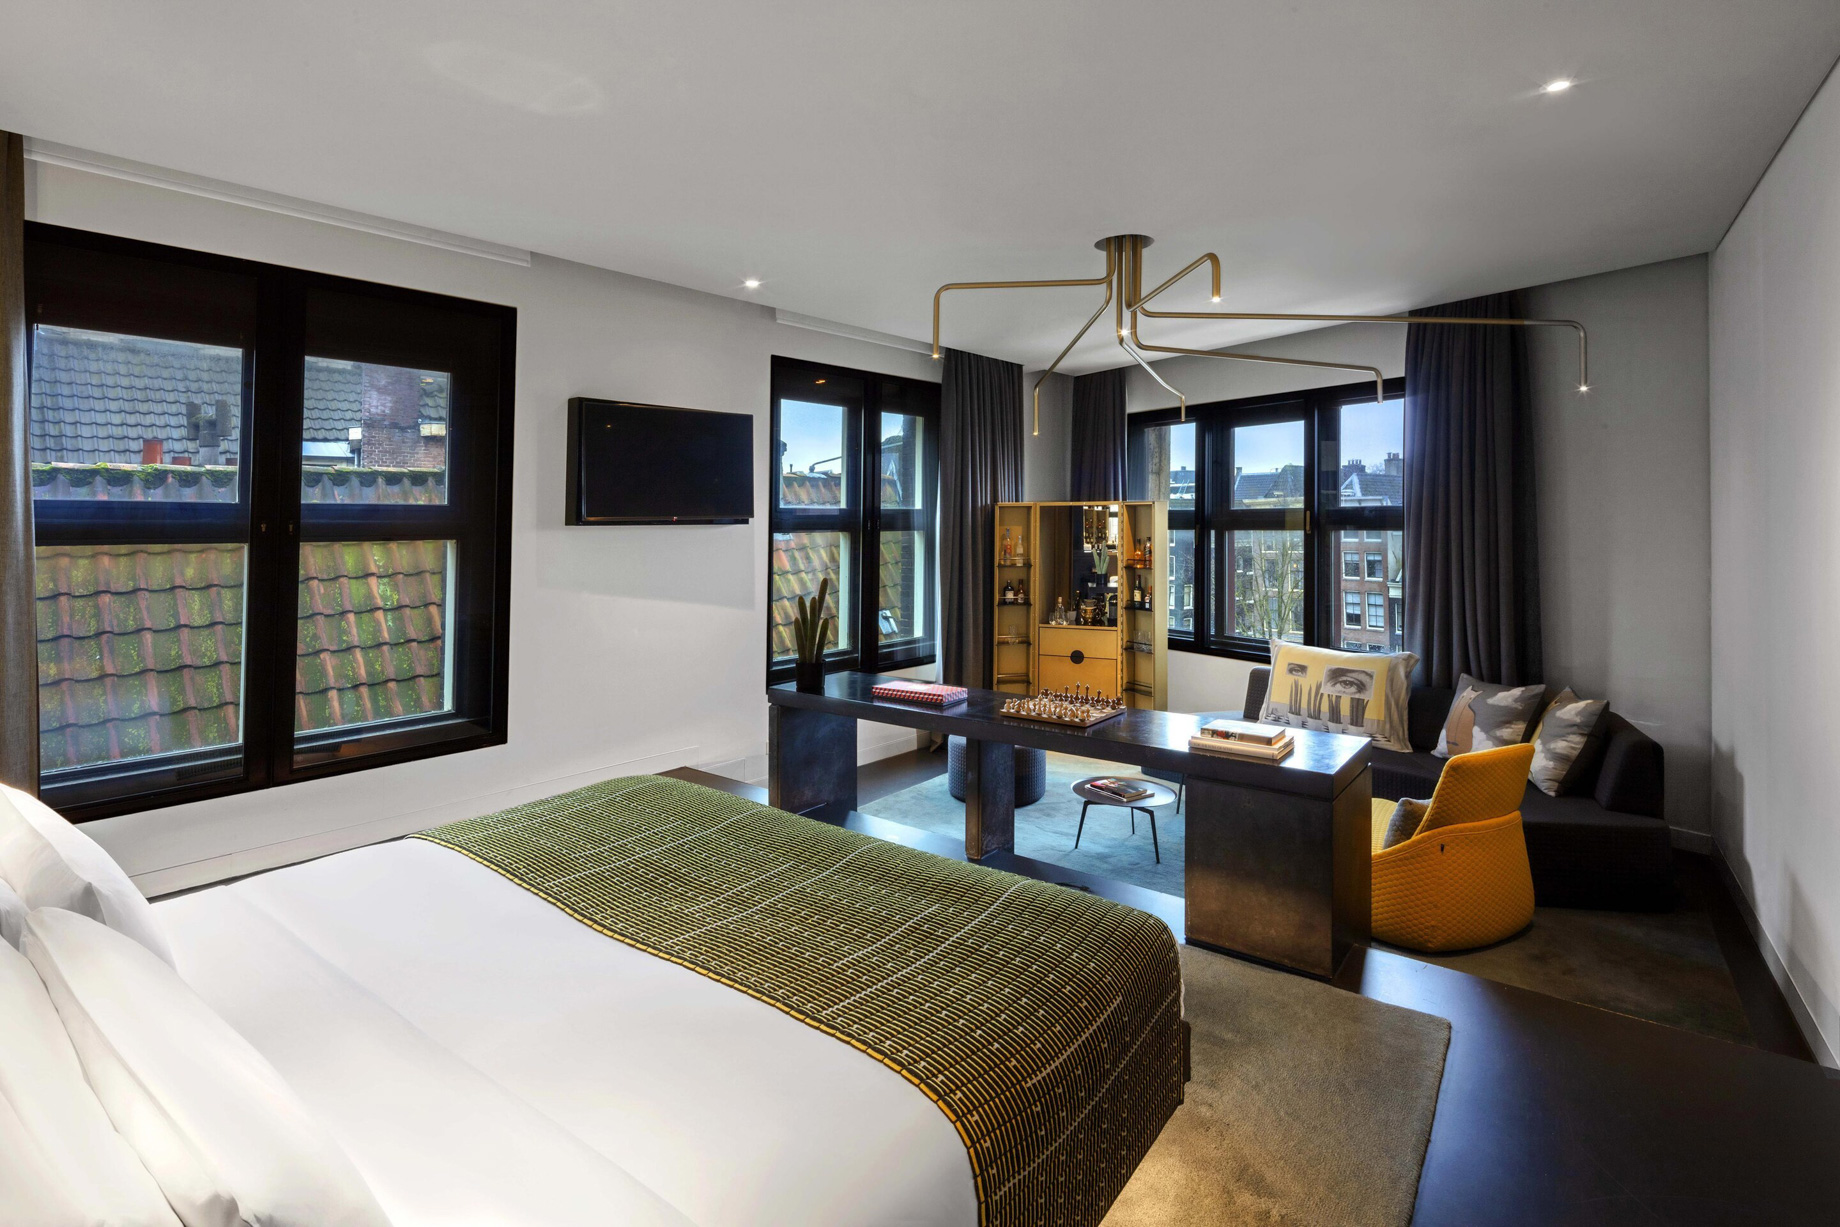 W Amsterdam Hotel – Amsterdam, Netherlands – Studio Bank Suite Living Area